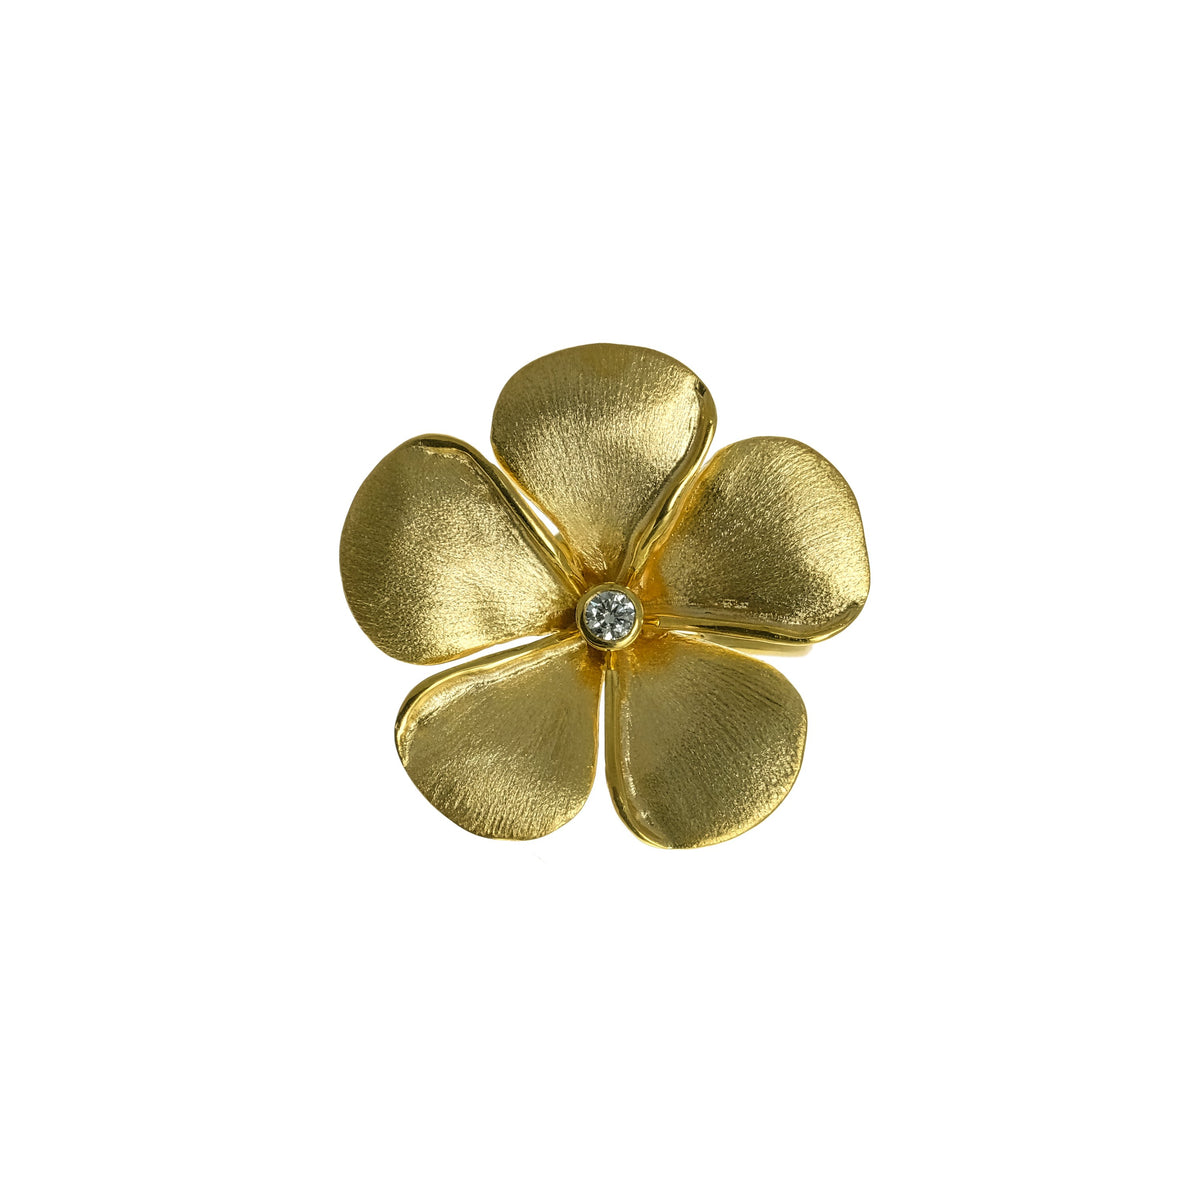 Diamond Kalachuchi Ring, Medium, Satin and Shiny Finish (available in yellow, white, and rose gold)